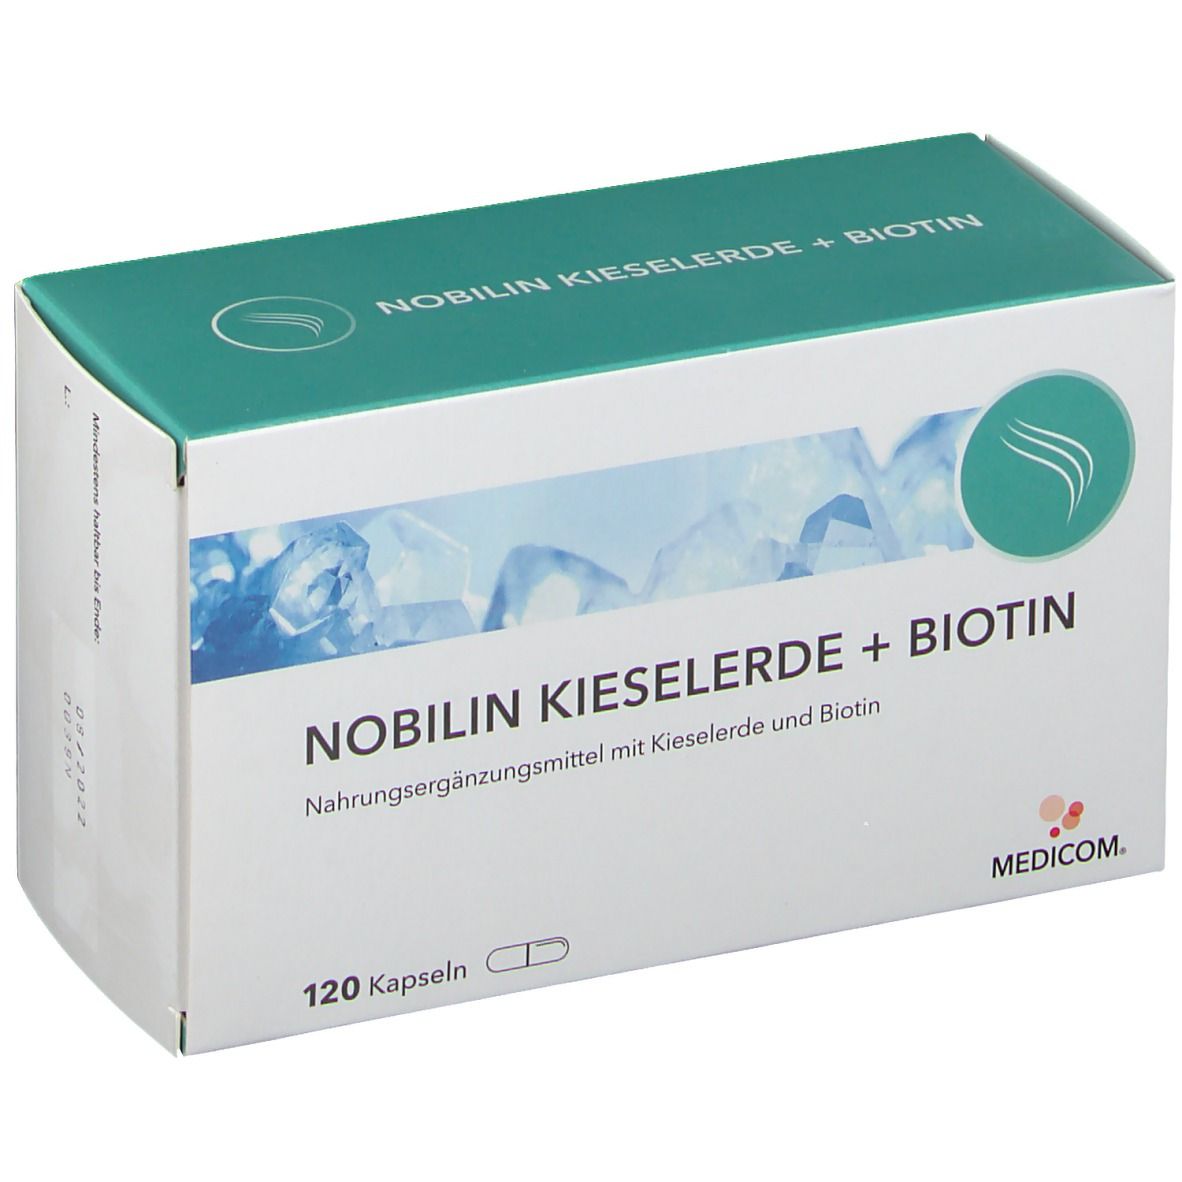 NOBILIN Kieselerde + Biotin